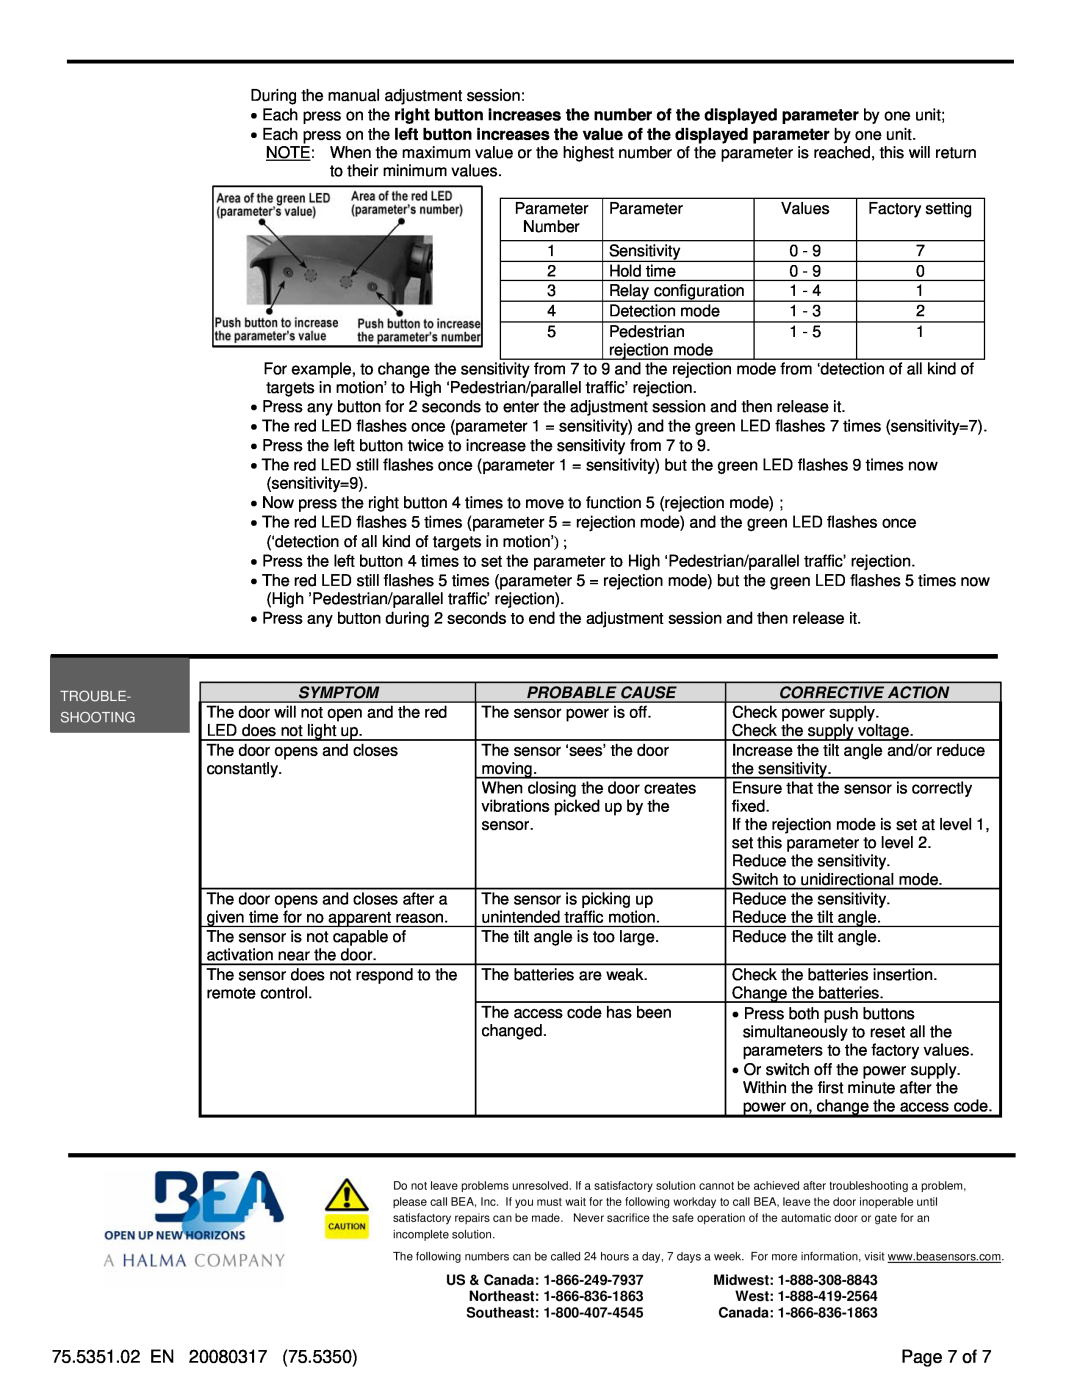 BEA FALCON XL dimensions 75.5351.02 EN, Page 7 of, Symptom, Probable Cause, Corrective Action 